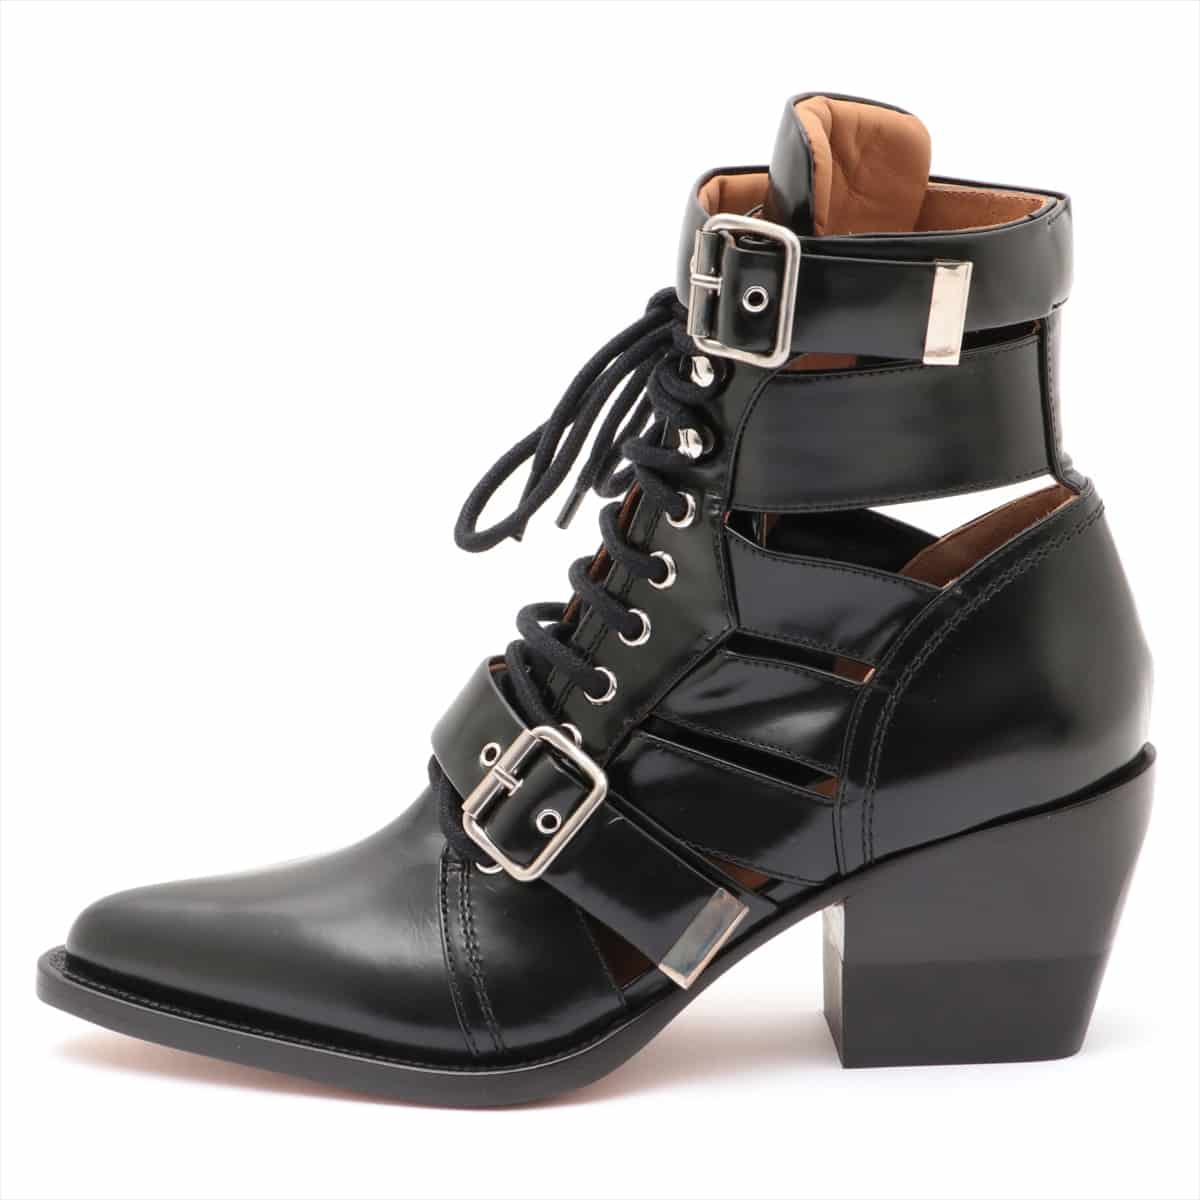 Chloe Leather Boots 39.5 Ladies' Black